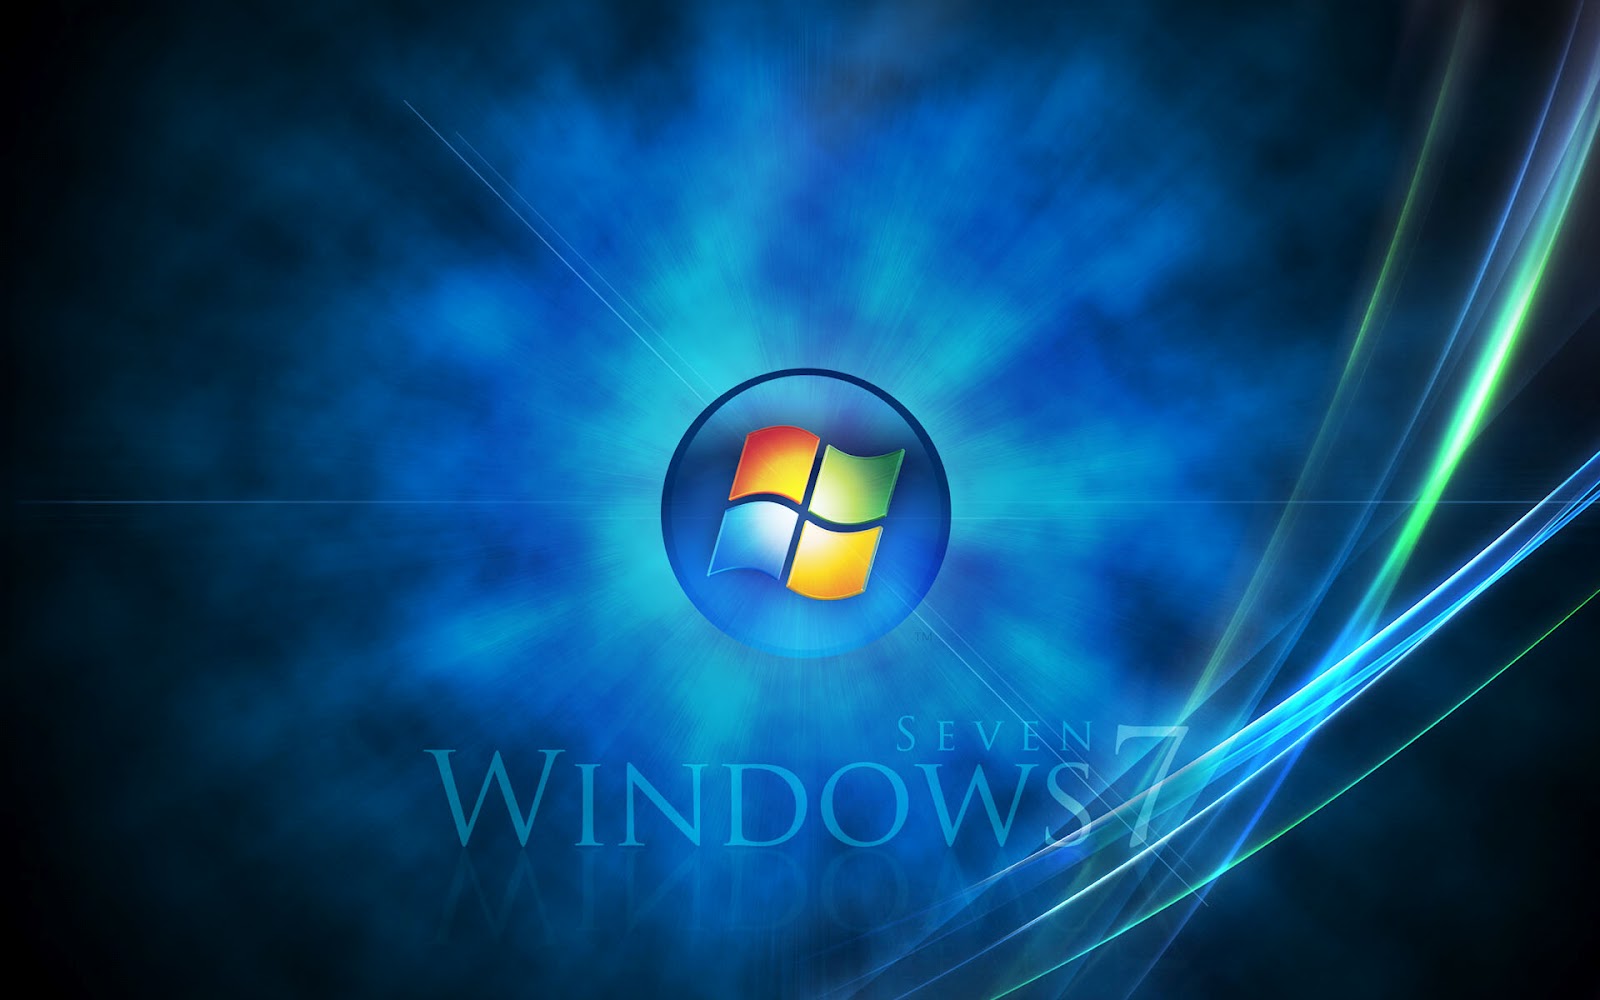 Windows 7 original wallpapers Windows 7 genuine wallpapers Windows